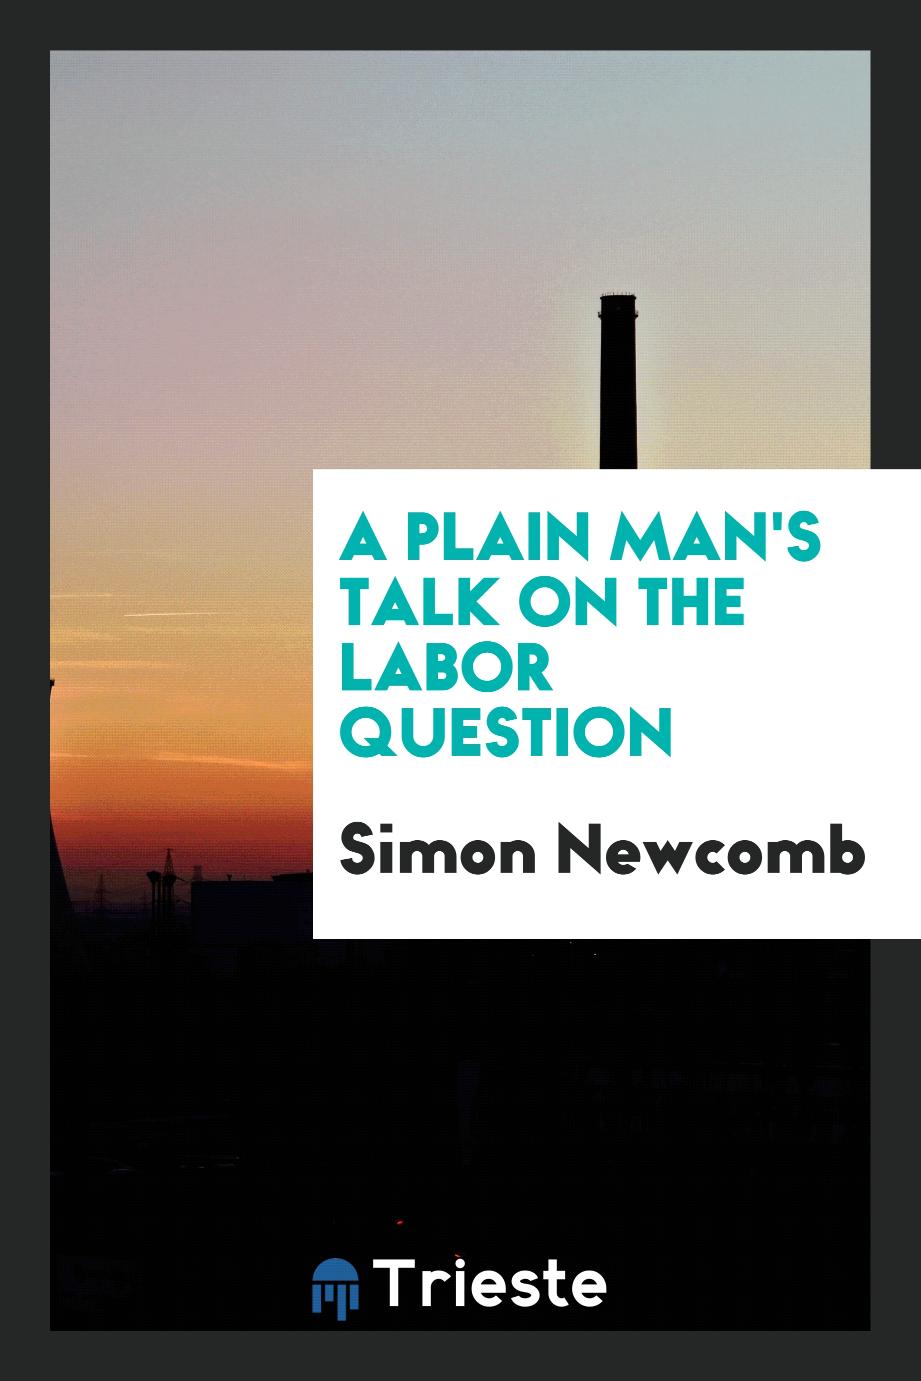 A plain man's talk on the labor question